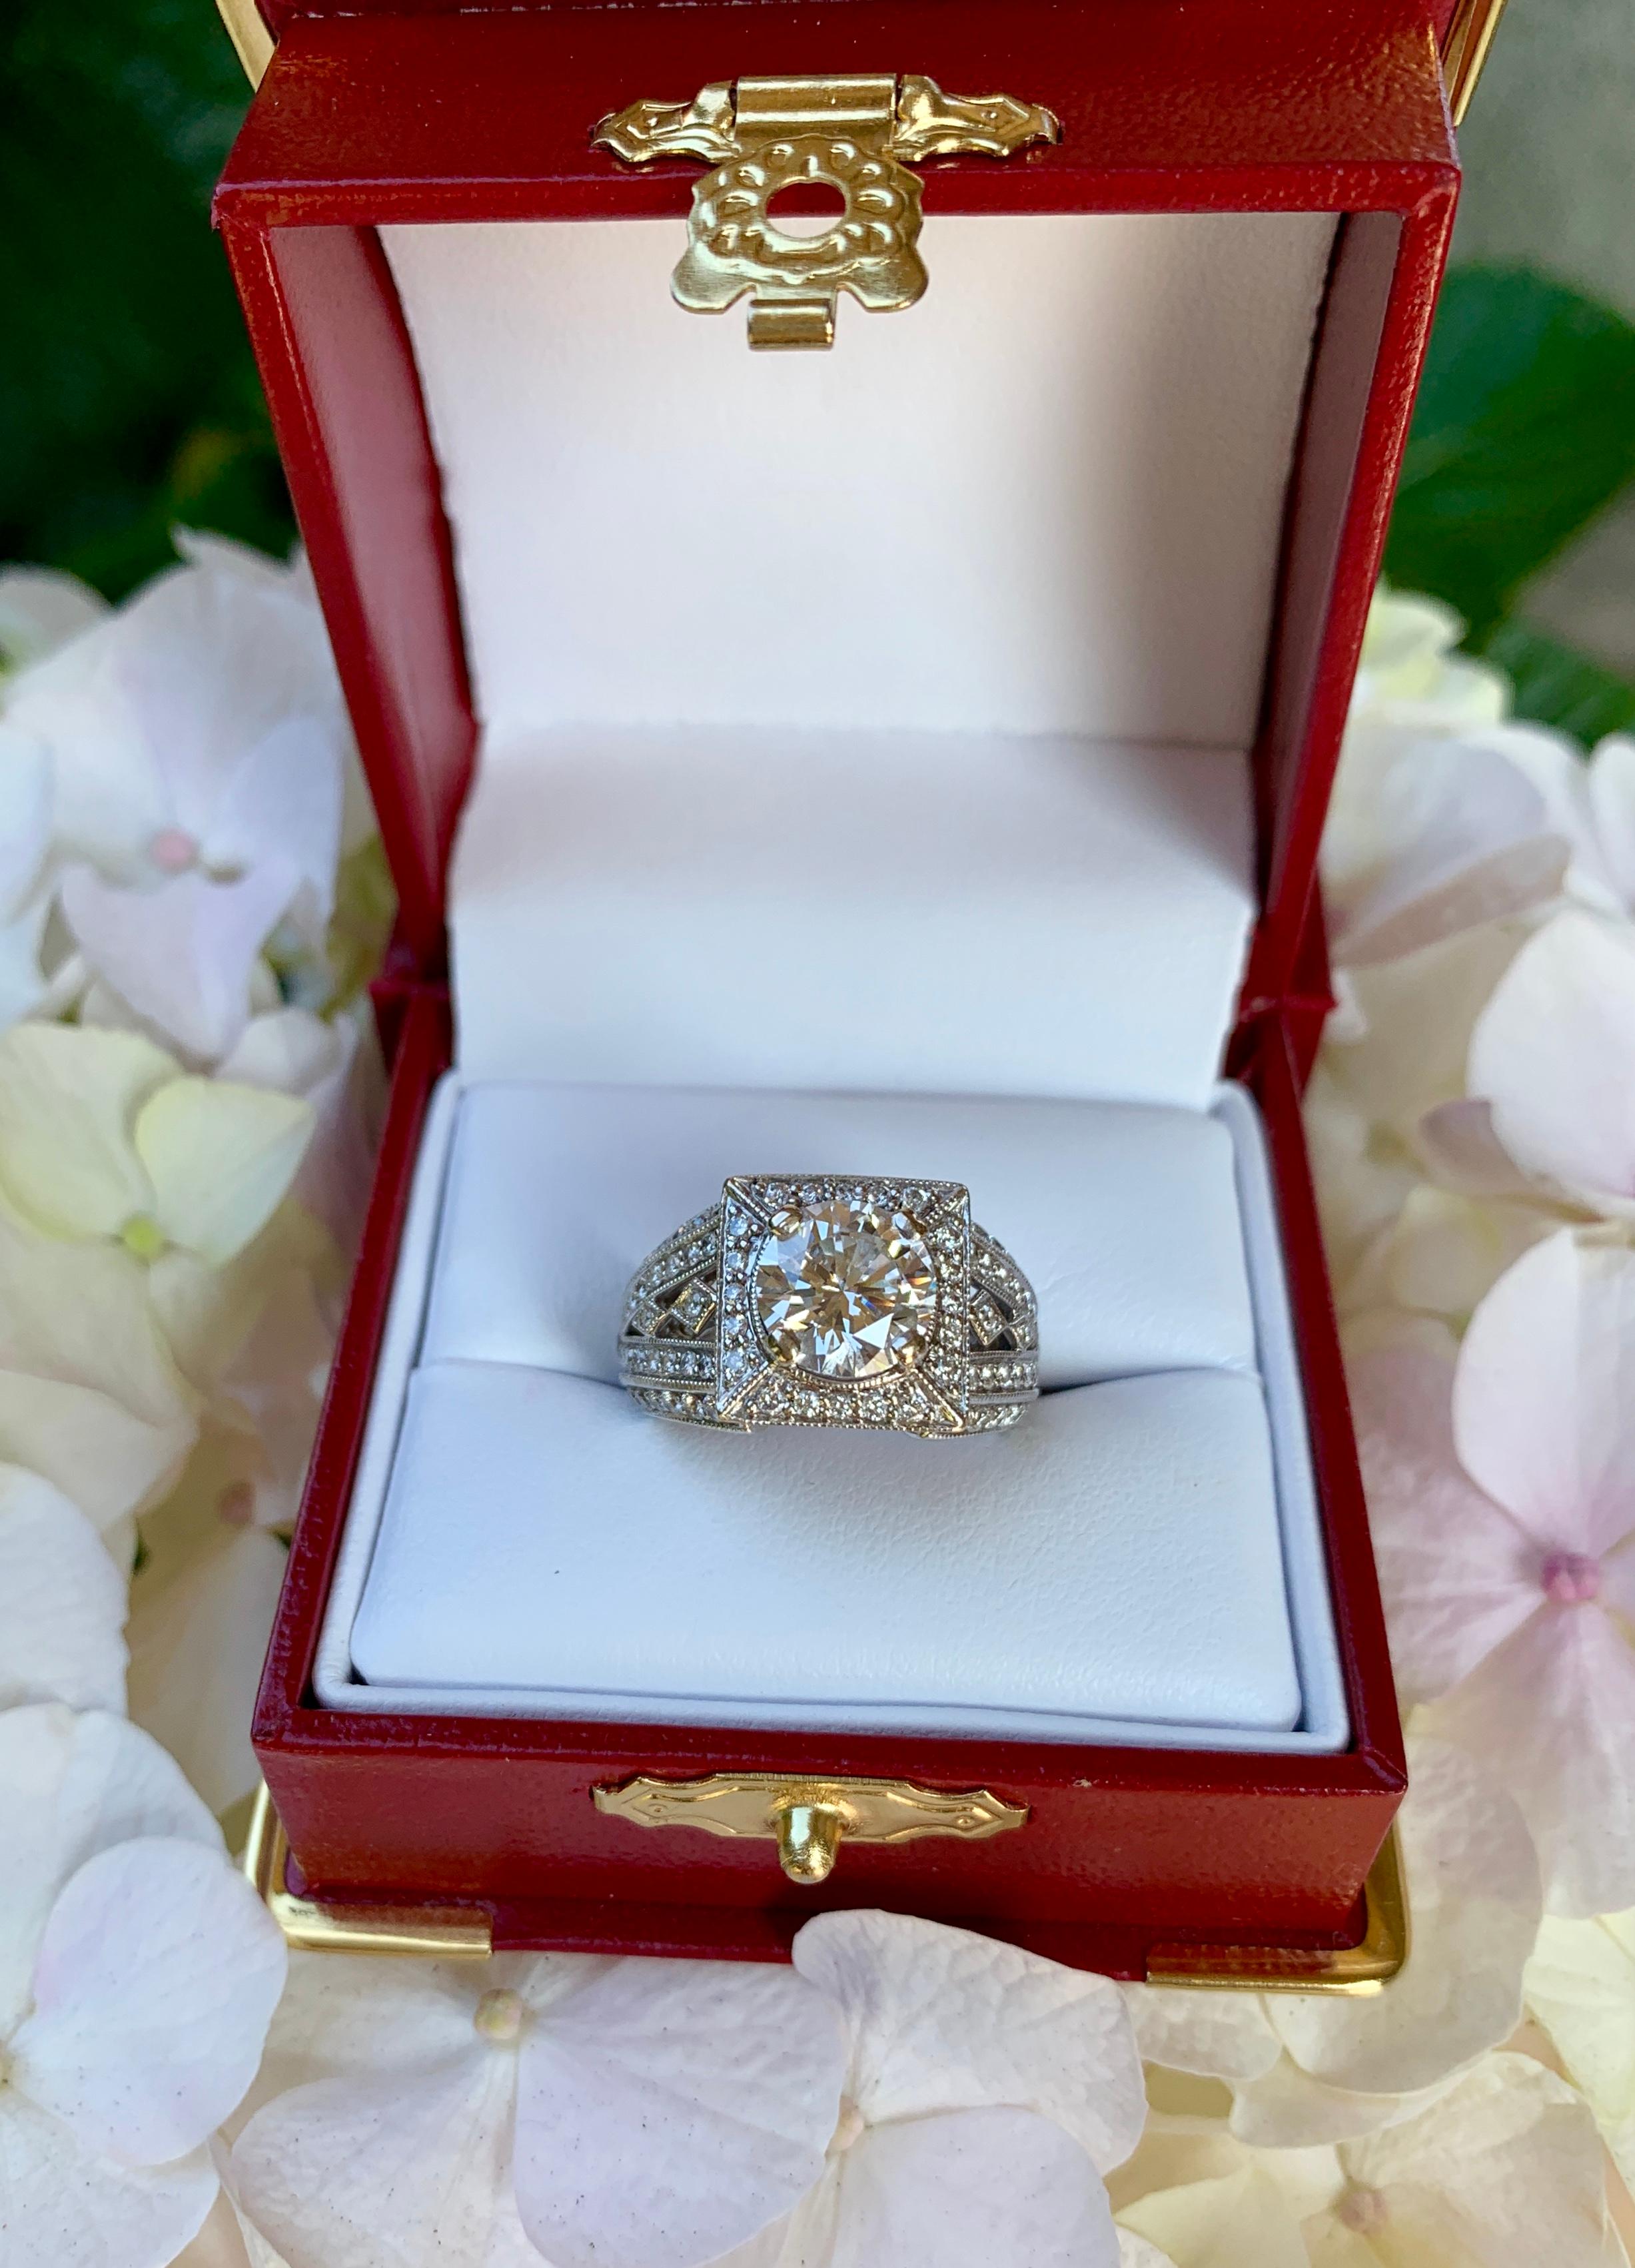 3.5 carat diamond ring